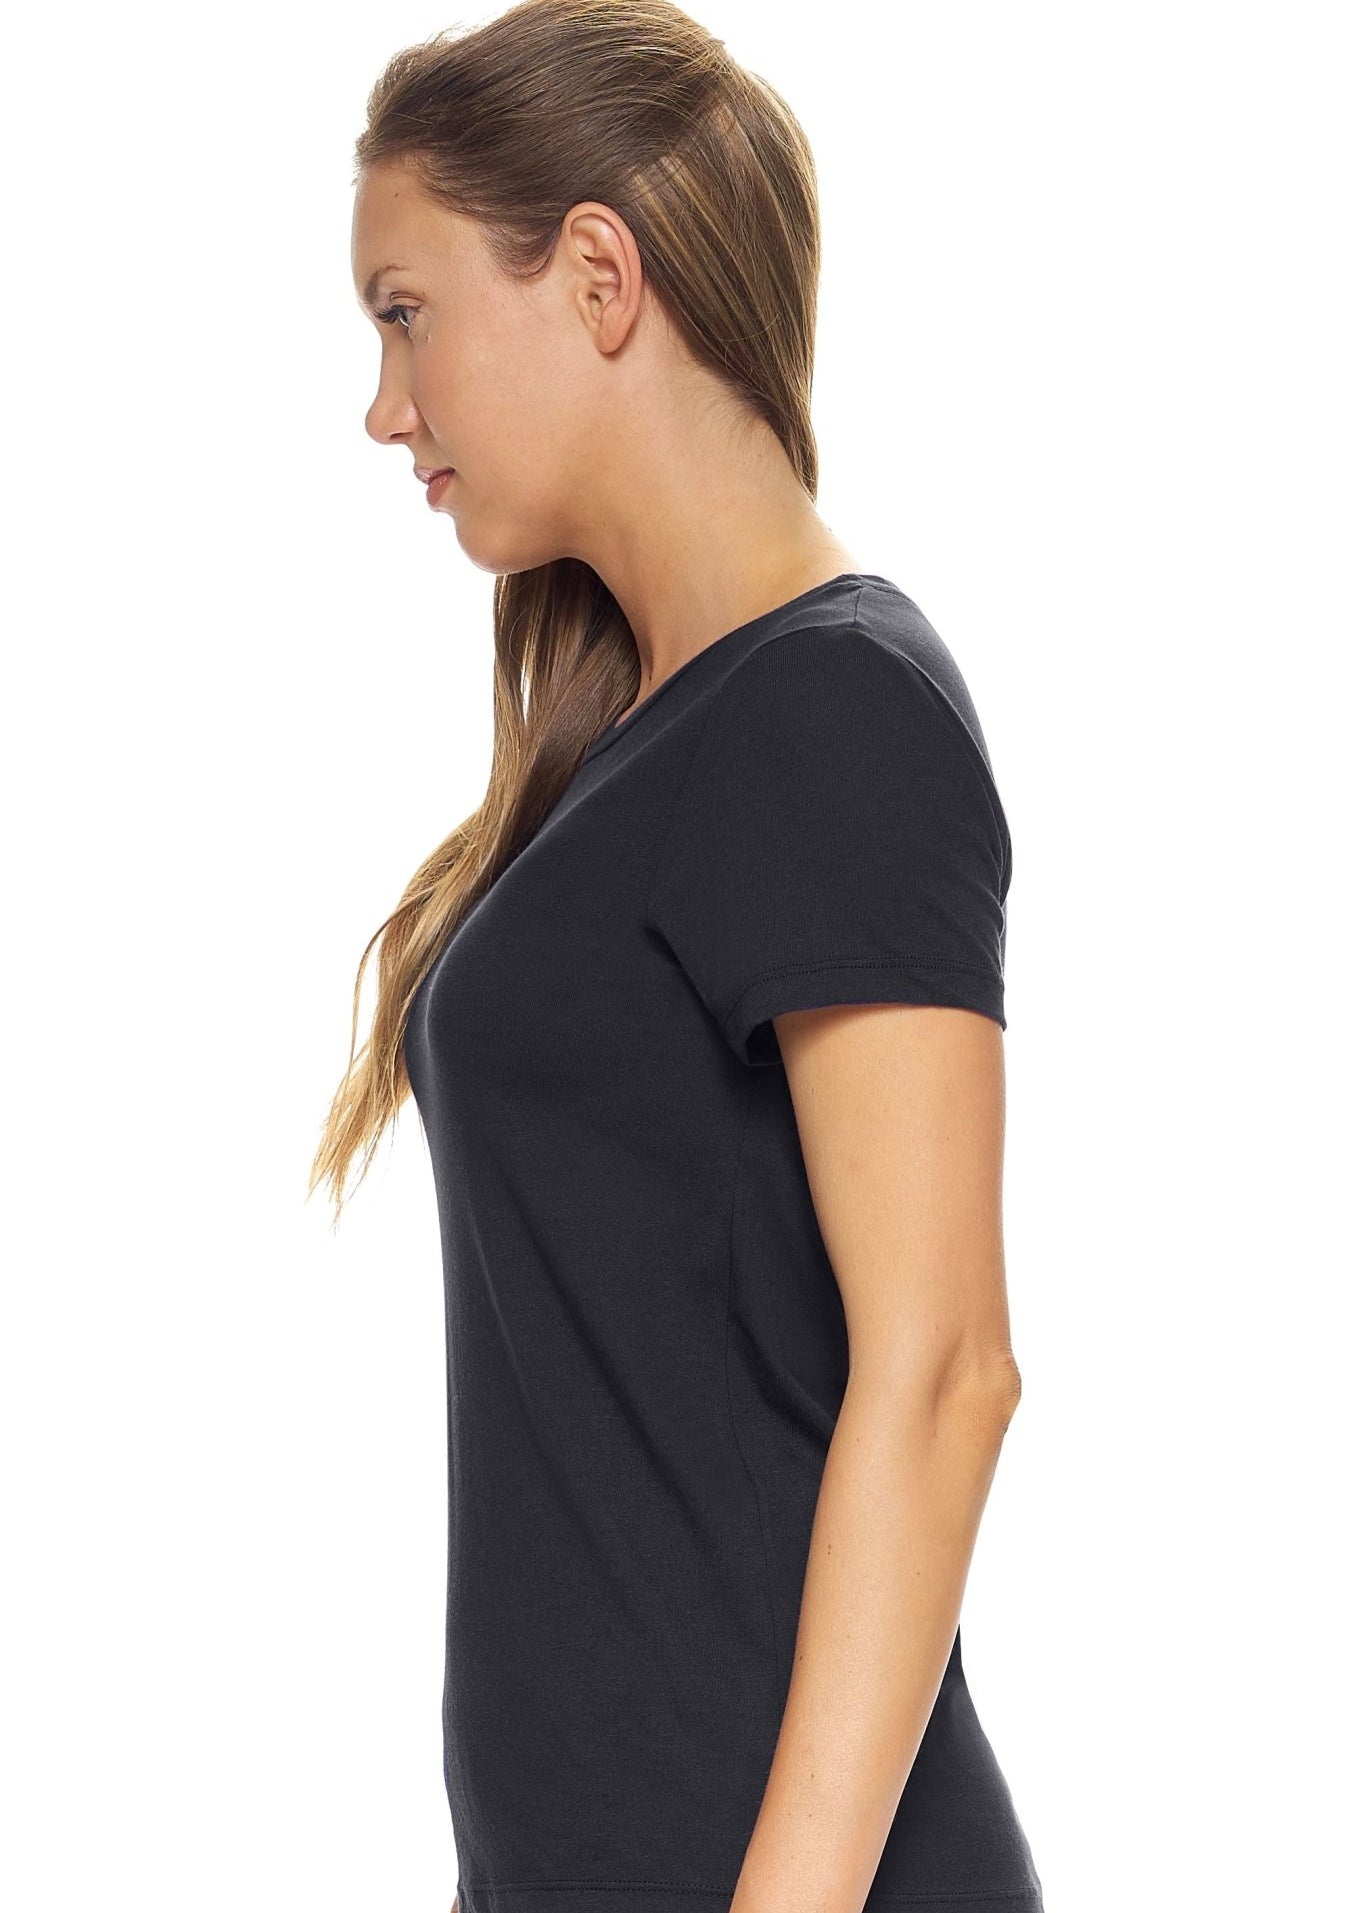 Expert Brand MoCA Plant Based Crewneck T-Shirt - DressbarnActivewear